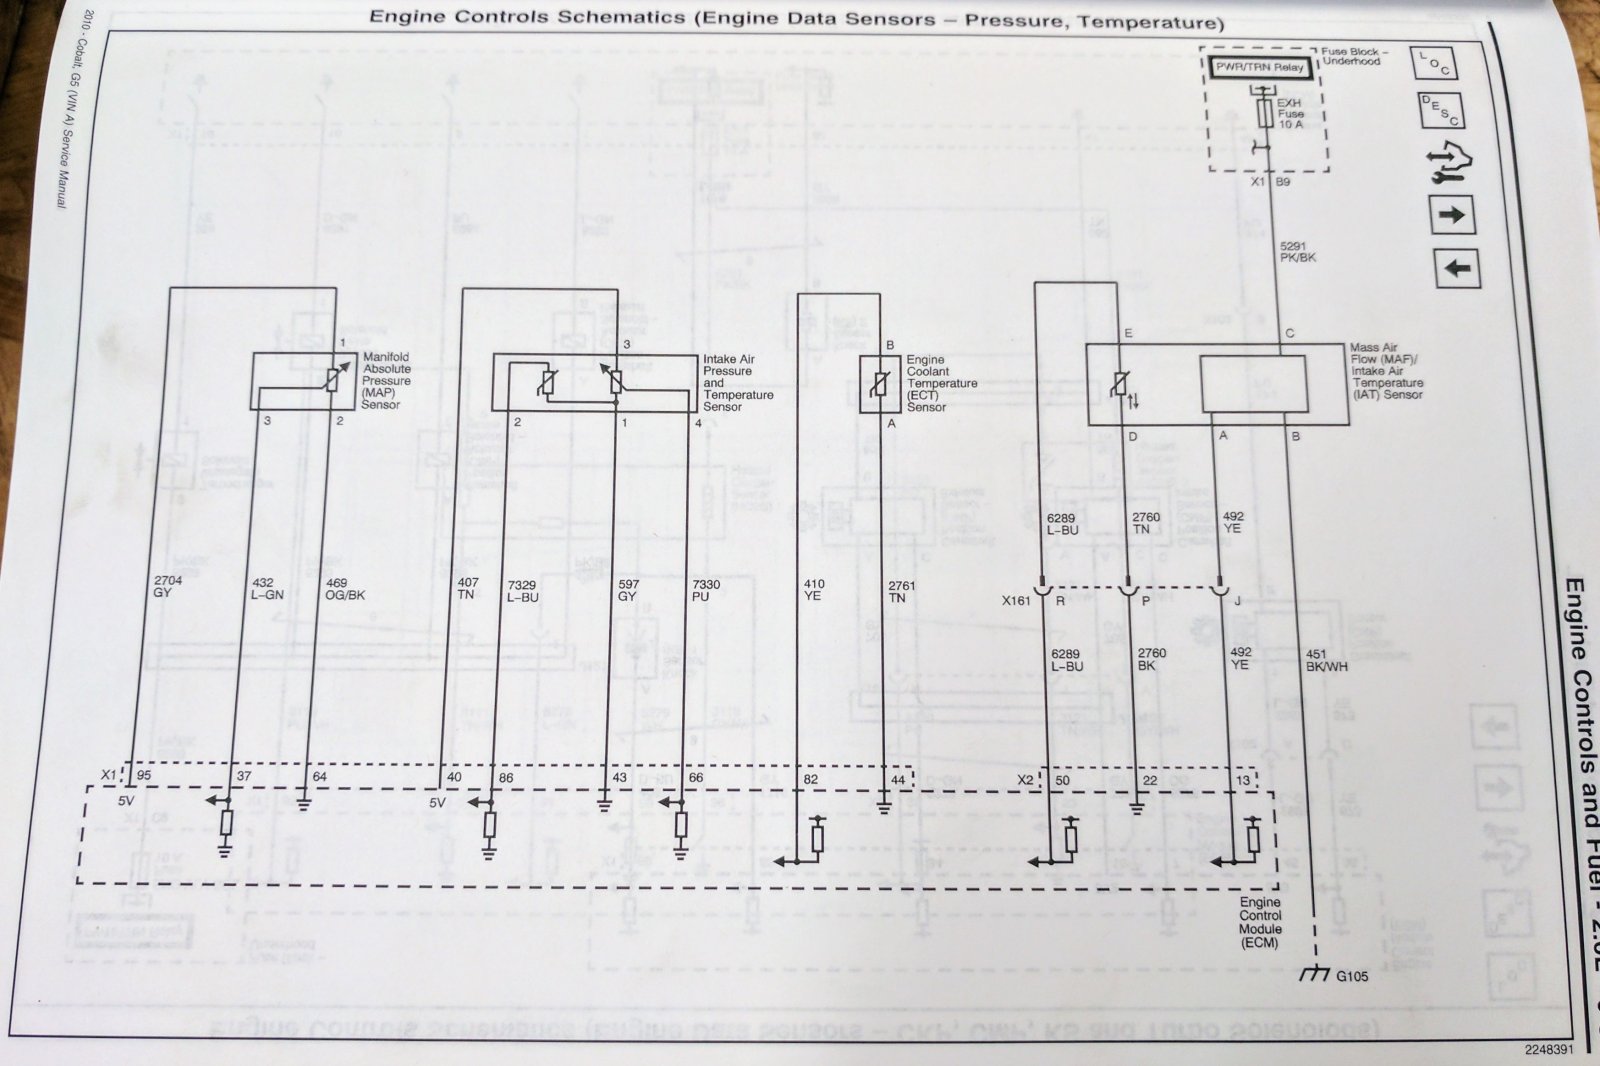 Engine Controls Schematics (engine Data Sensors - Pressure, Temperature) LNF